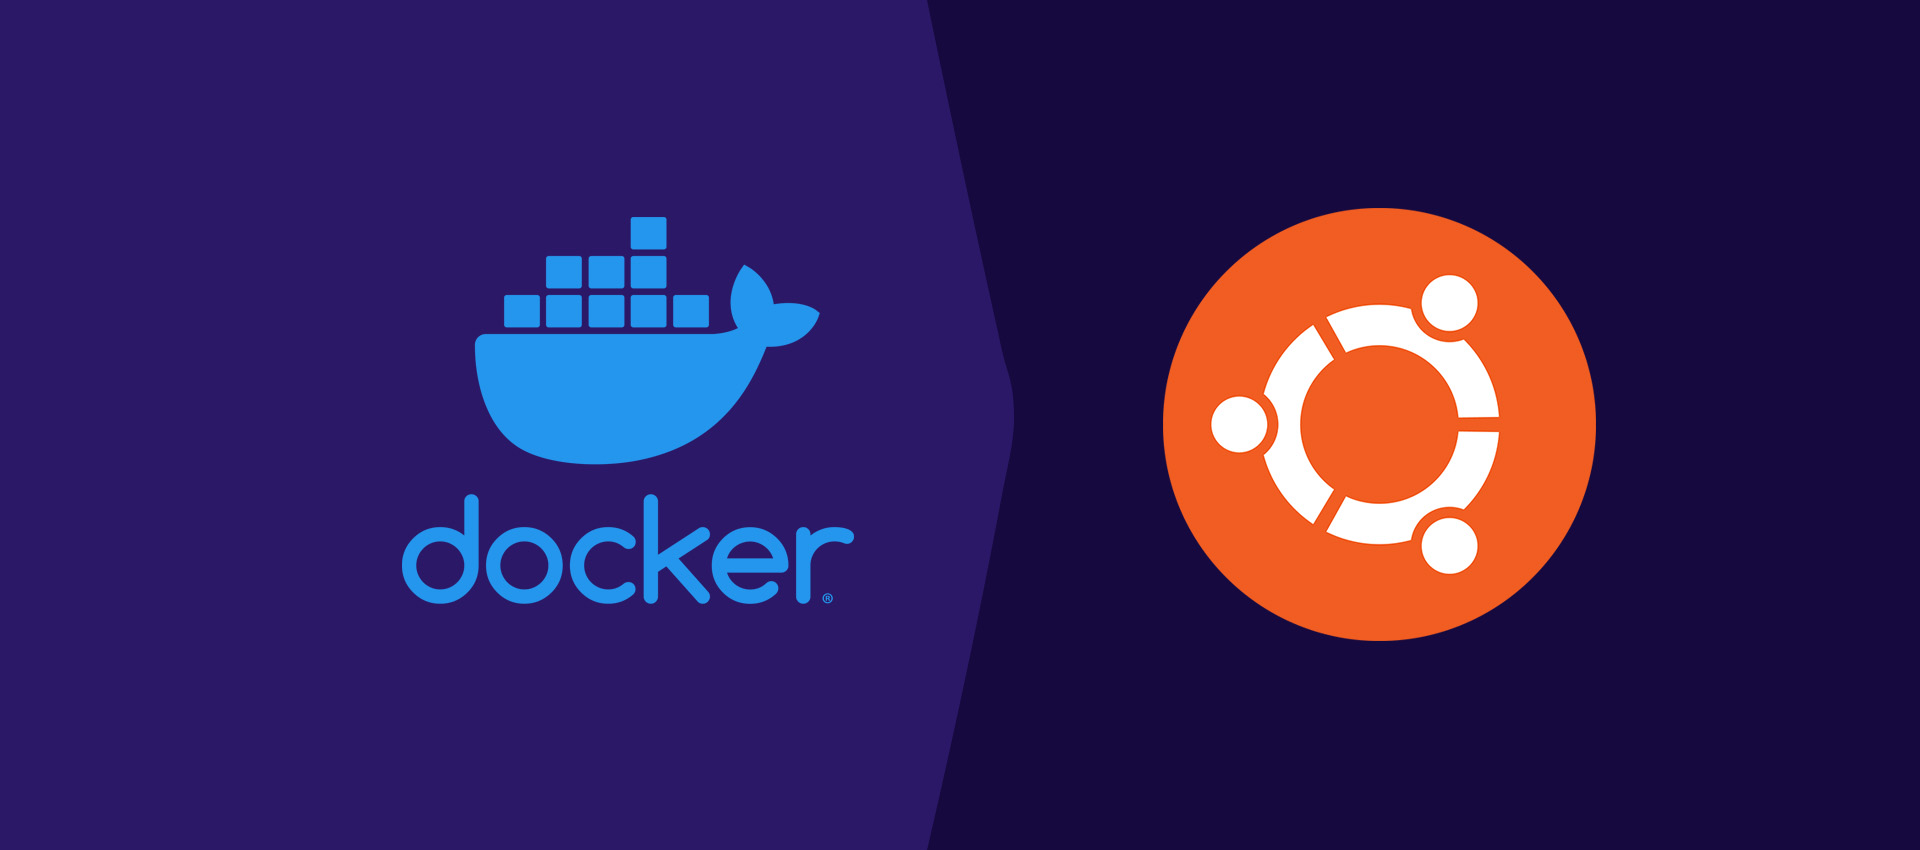 How To Install Docker Engine on Ubuntu 20.04 LTS